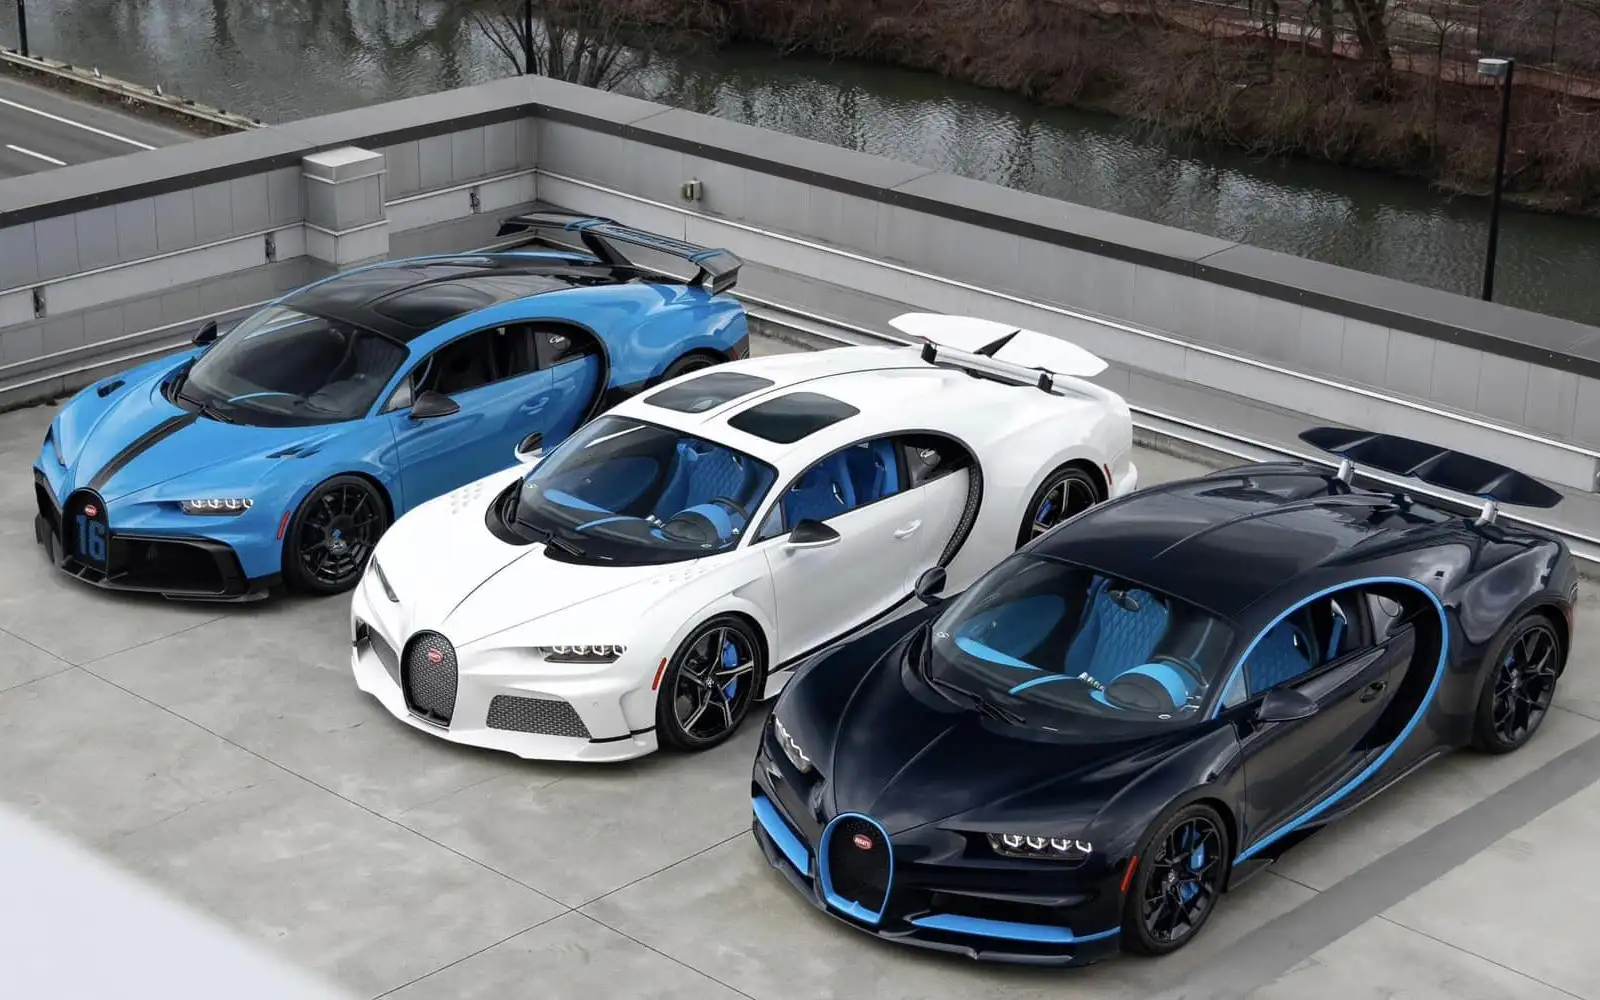 MACC seeks update from Germany over seizure of ‘rare’ Bugatti Veyrons